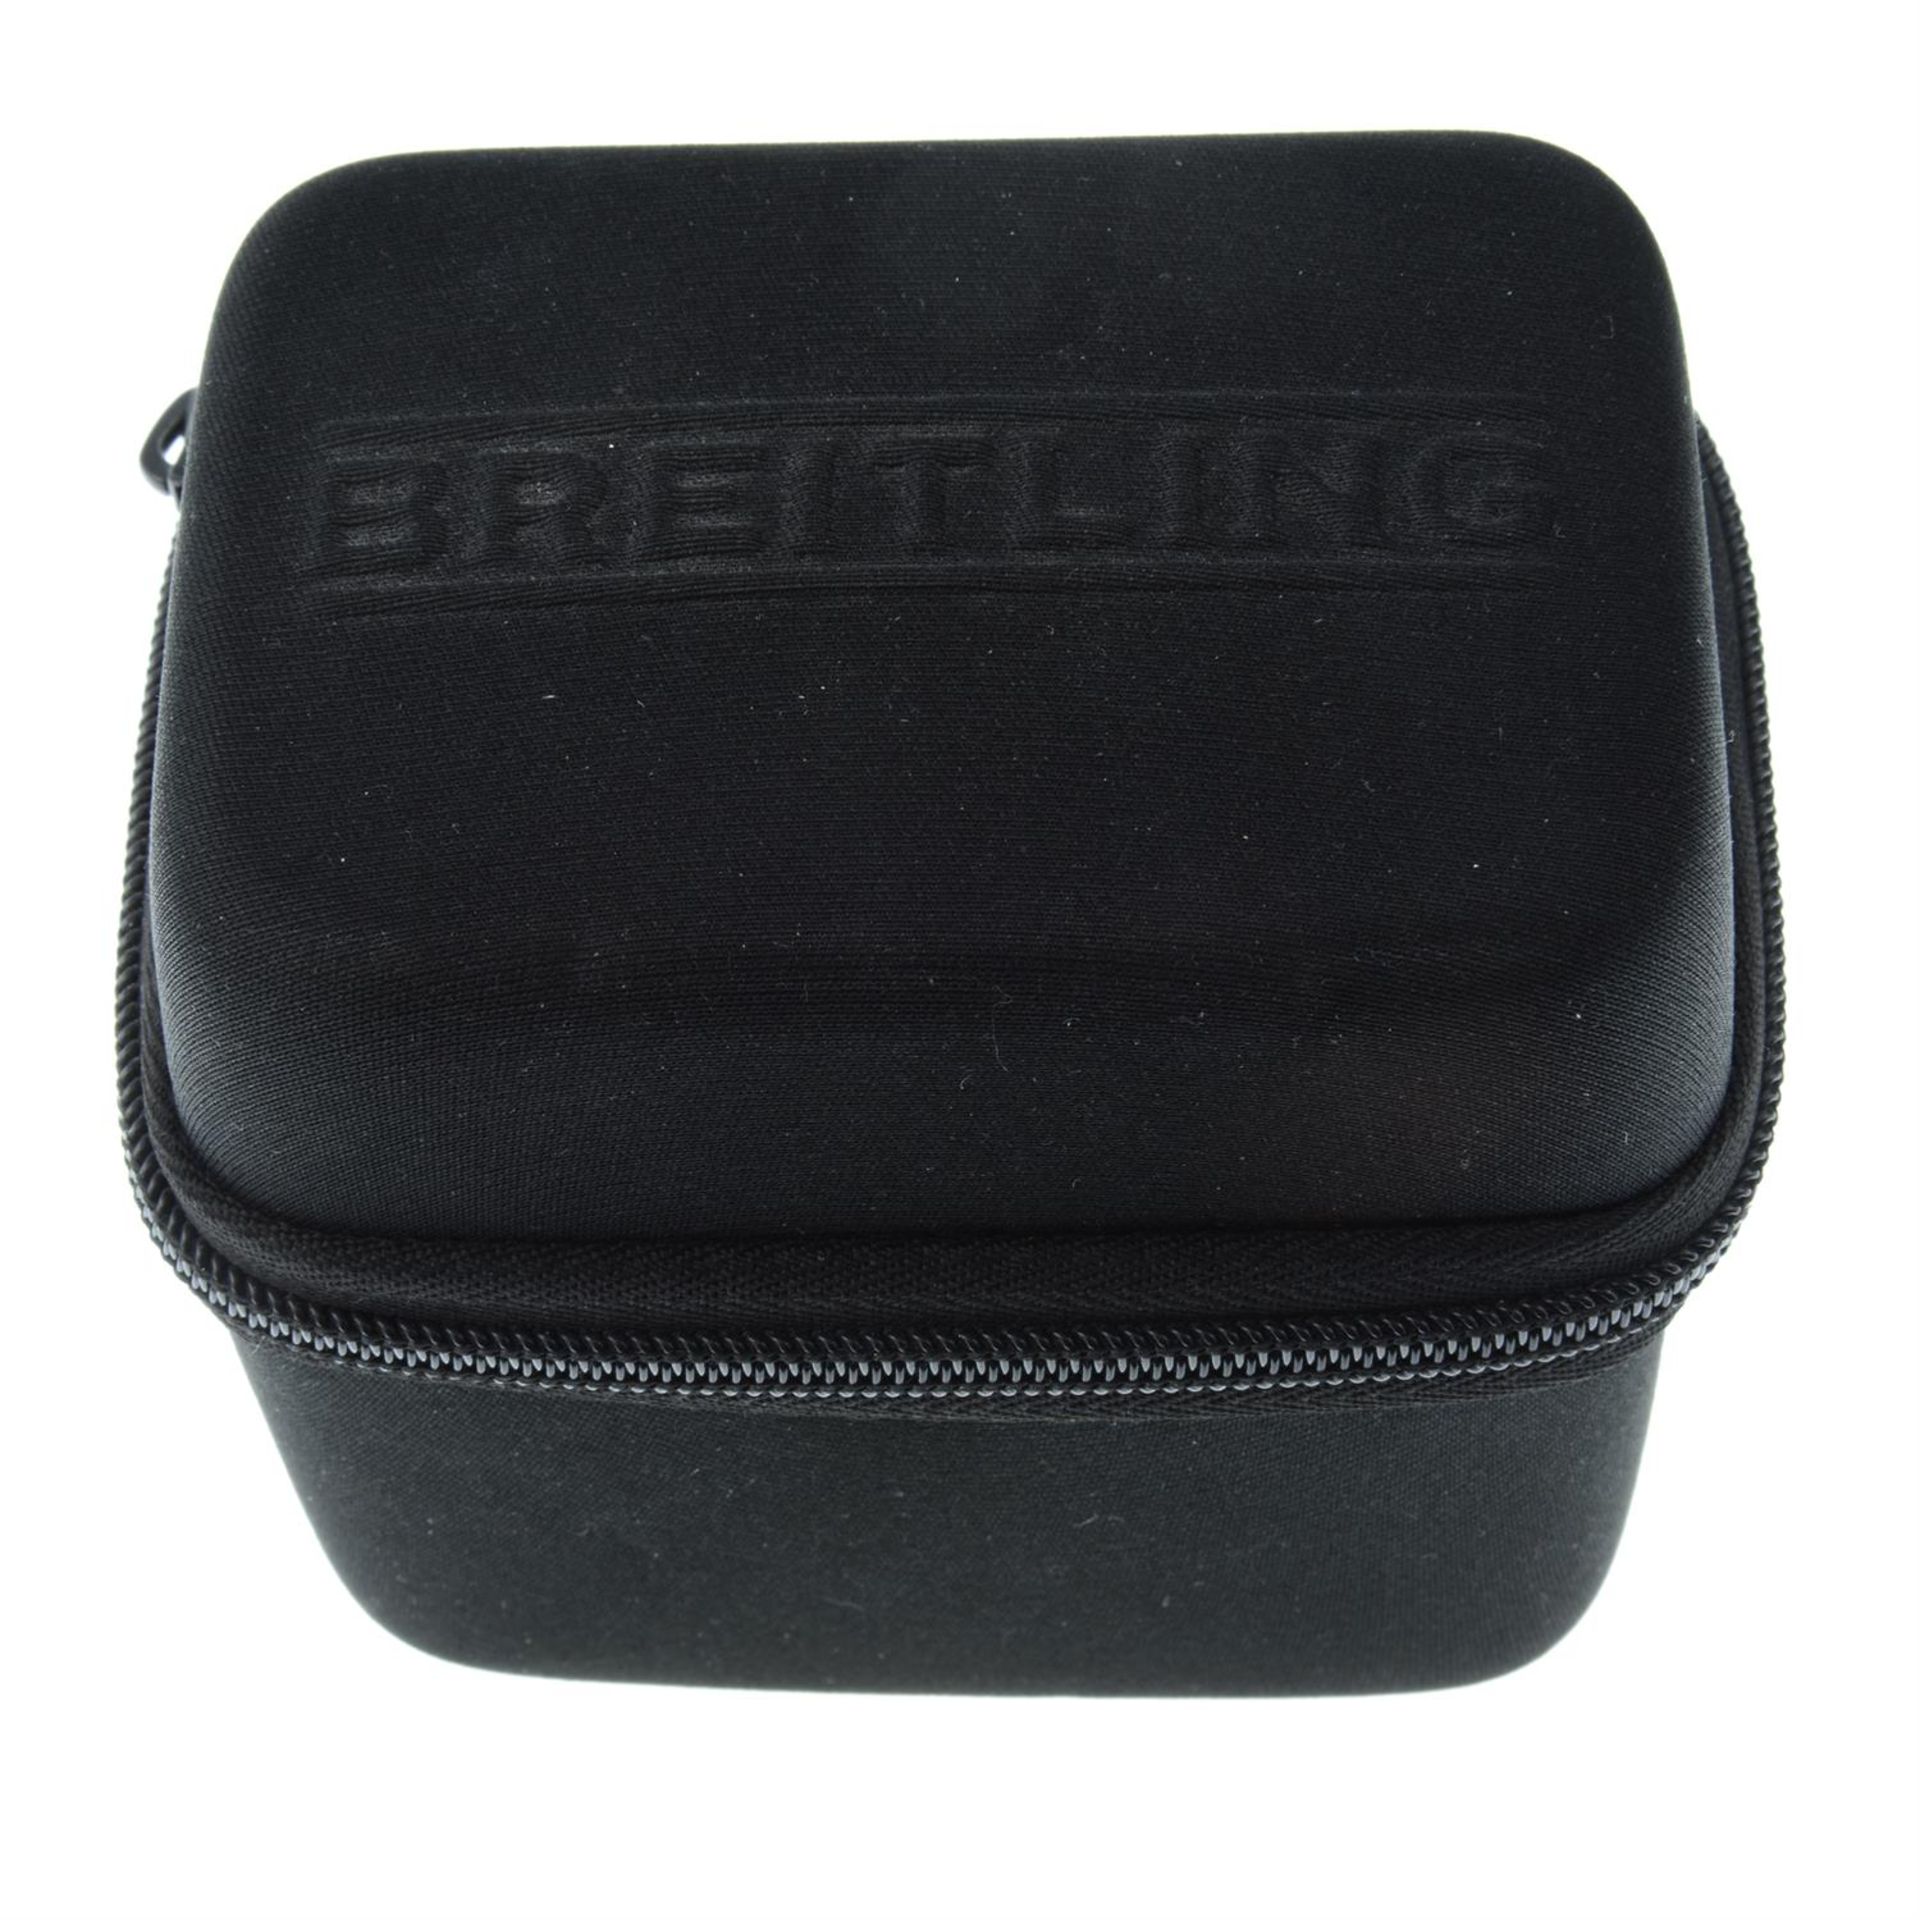 BREITLING - a limited edition stainless steel Navitimer chronograph wrist watch, 42mm. - Bild 6 aus 6